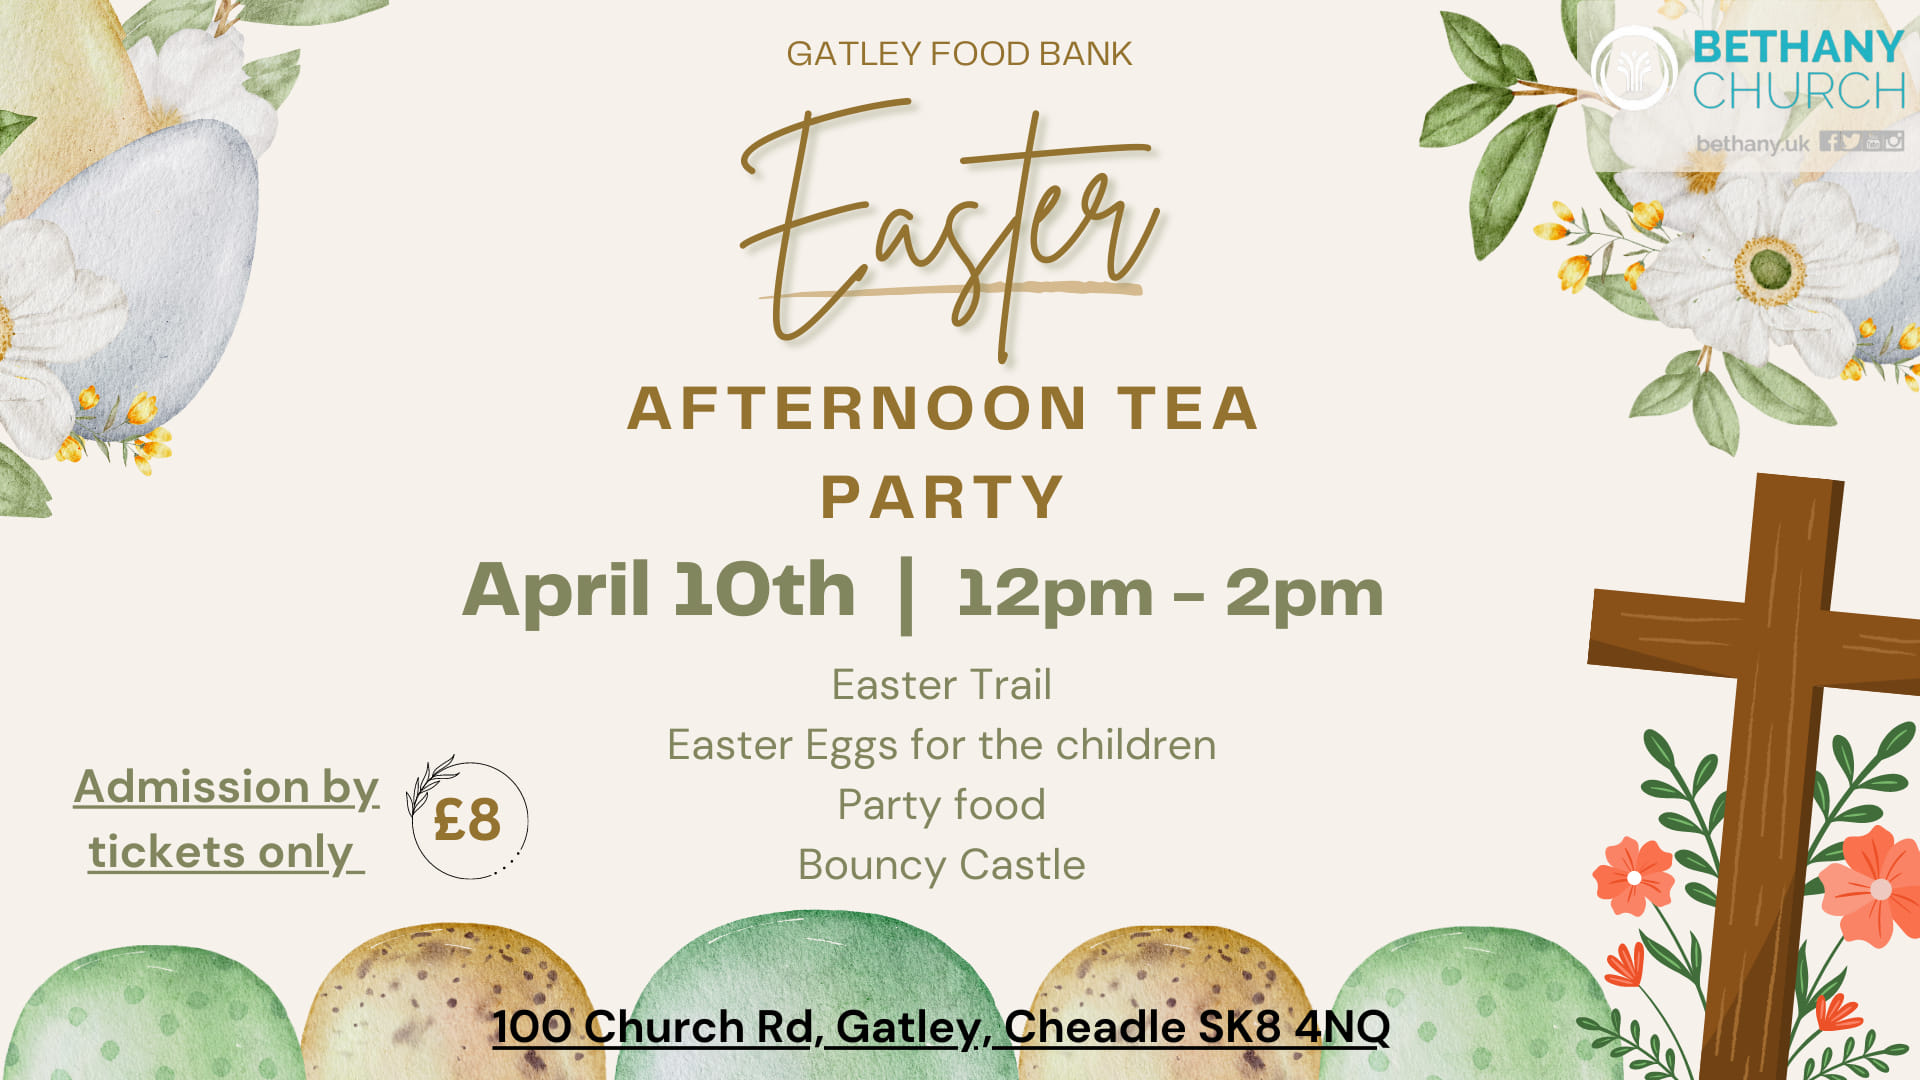 Gatley Foodbank Easter Tea party